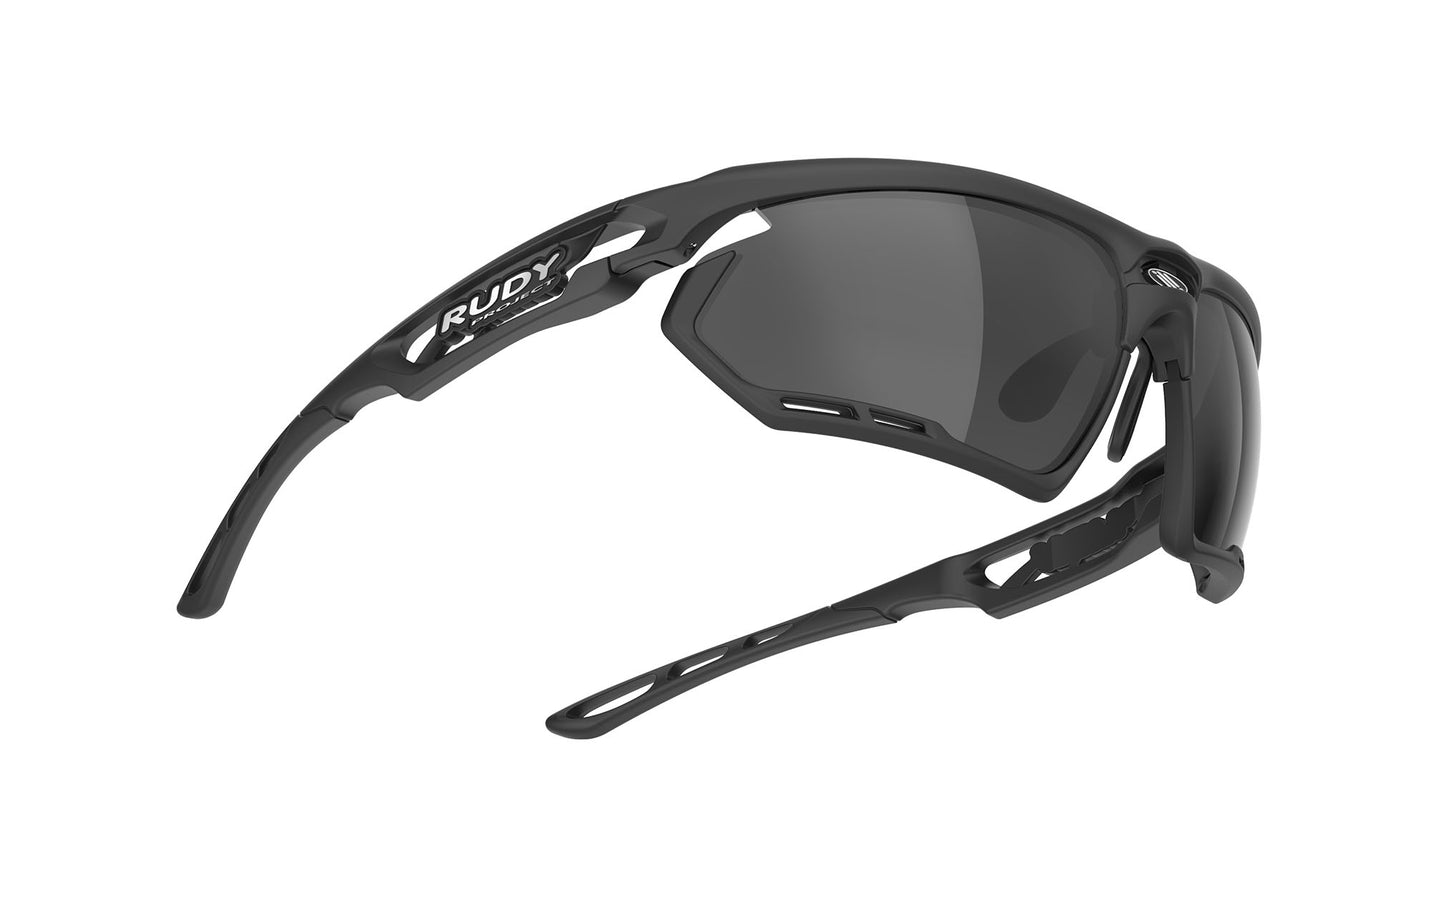 Rudy Project Fotonyk Black Matte - Rp Optics Smoke Black Sunglasses